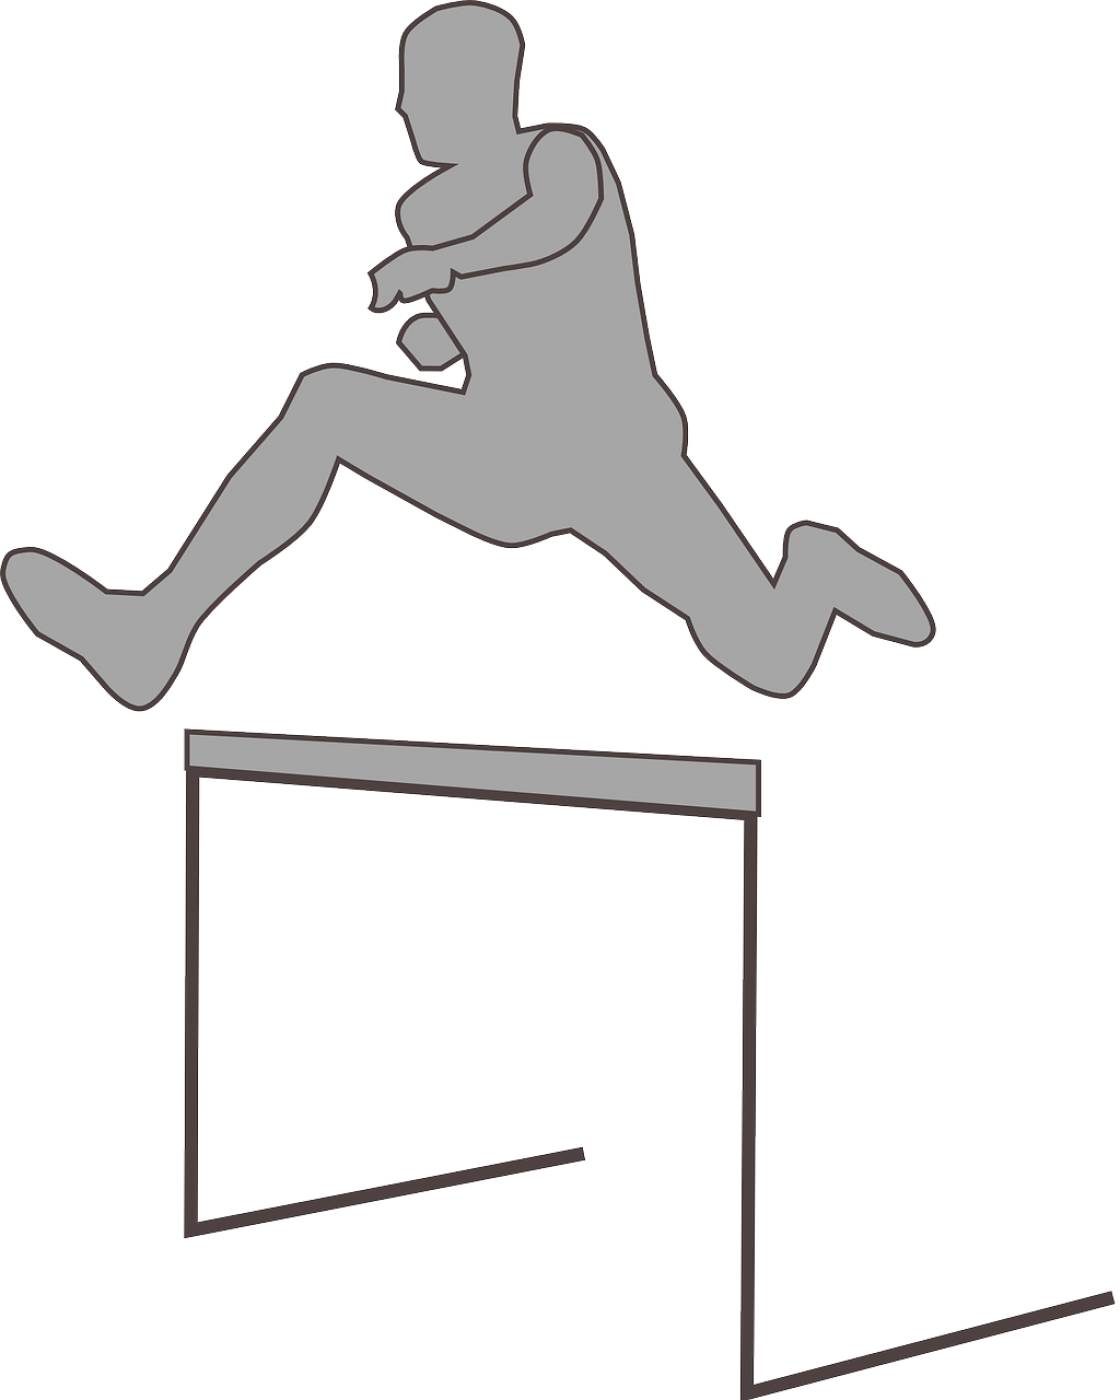 man runner jumper silhouette jump  svg vector